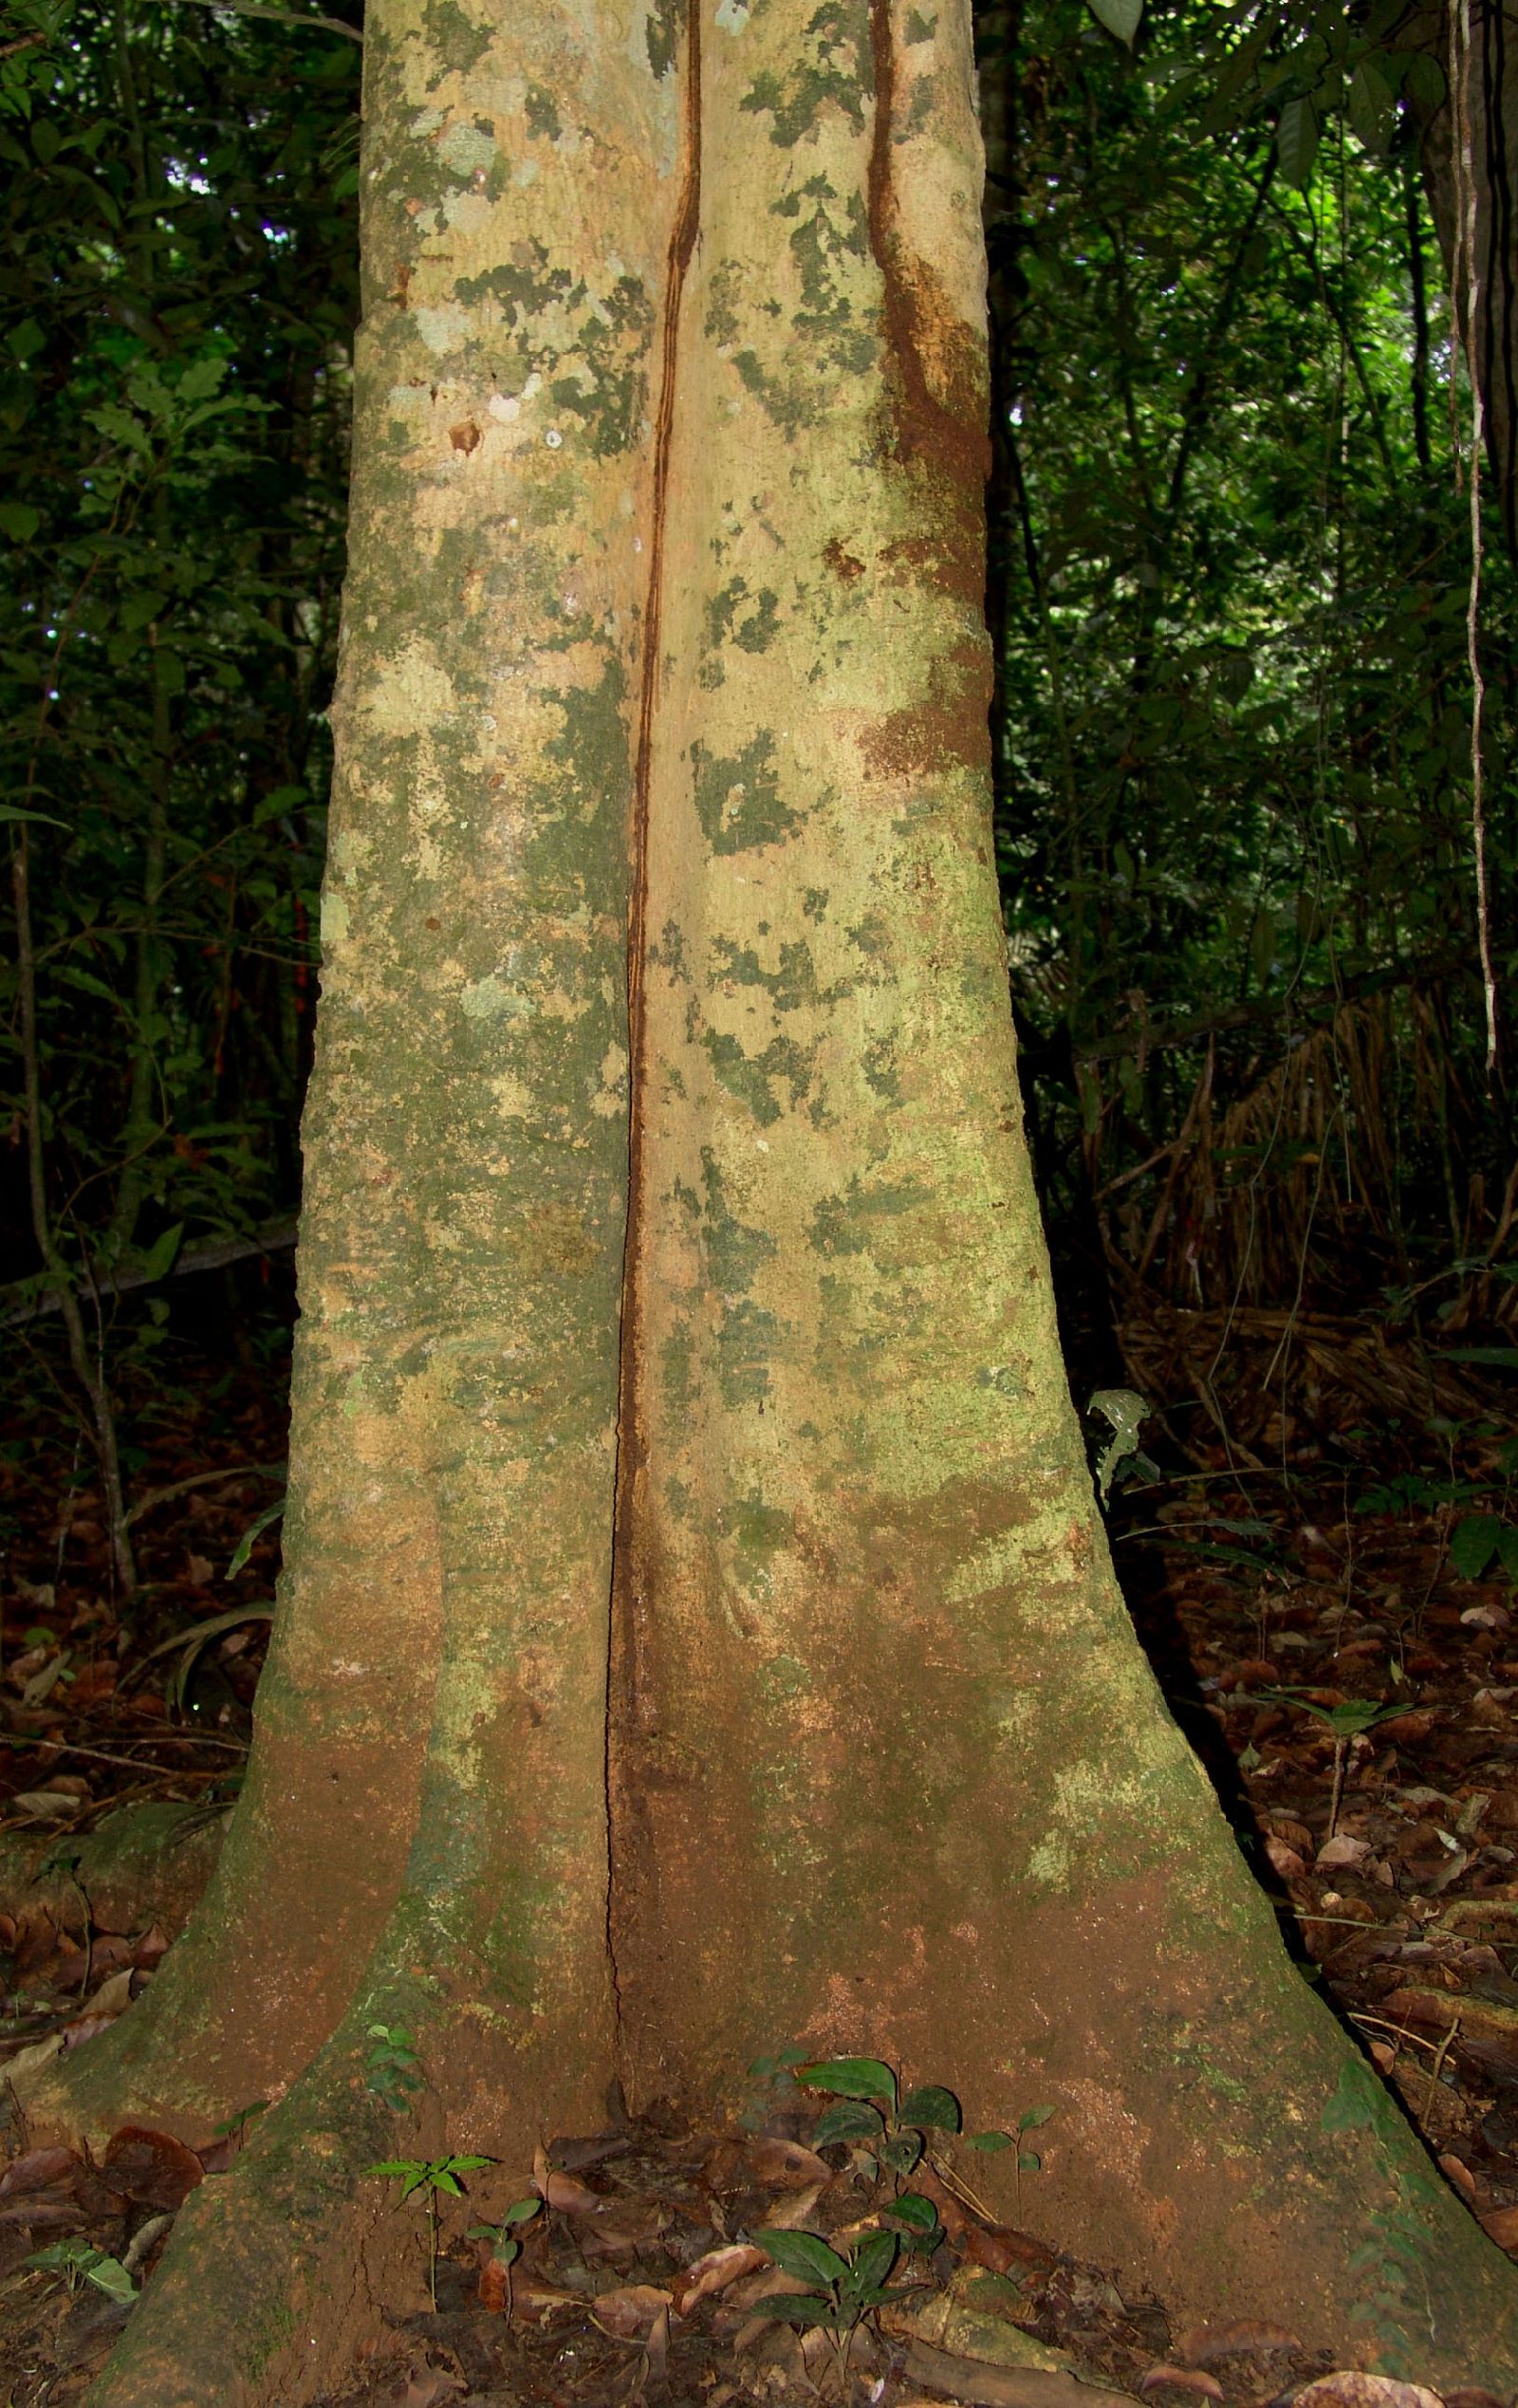 Tabernaemontana arborea image